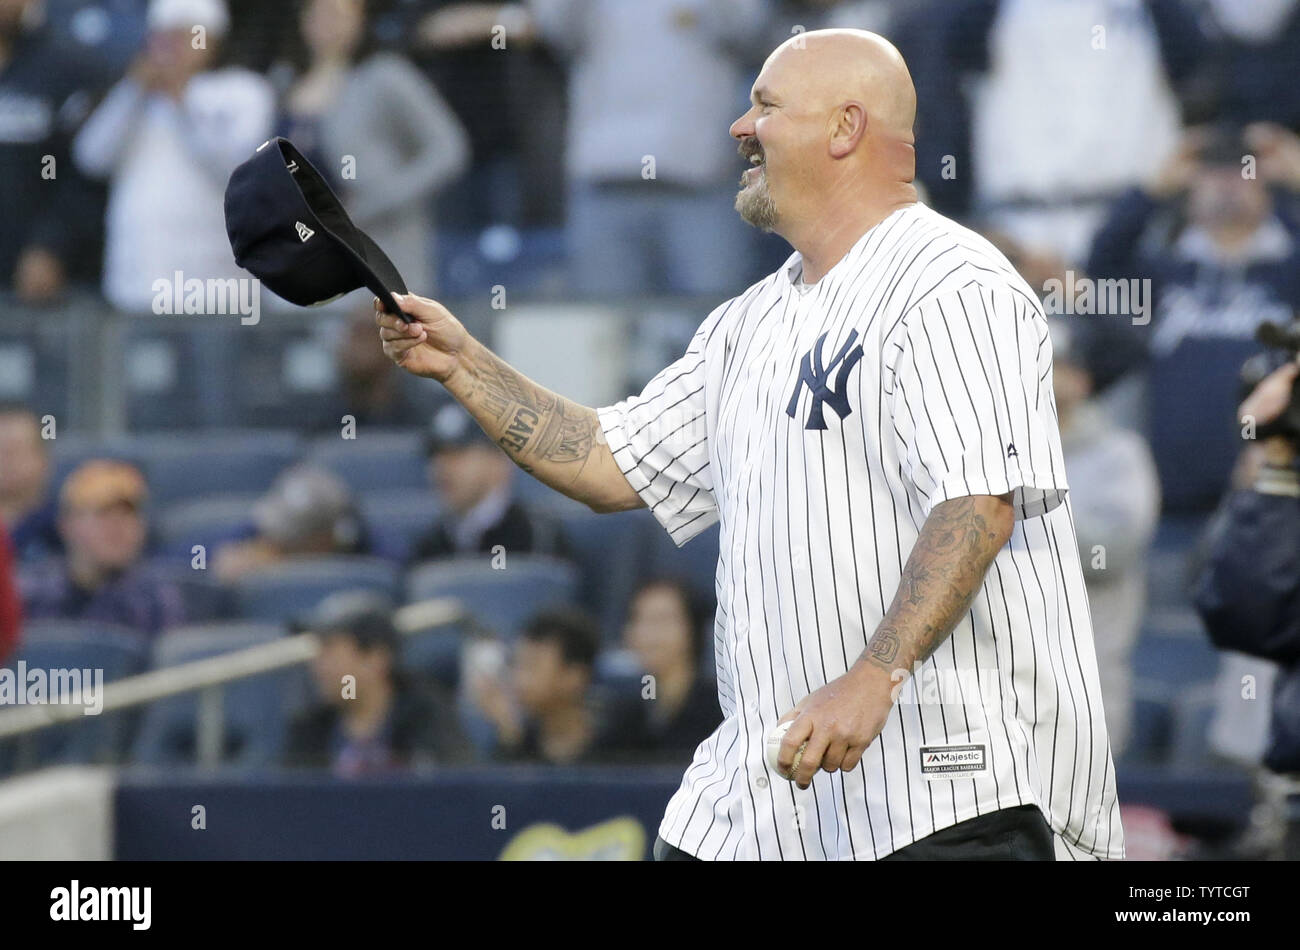 Chris Pine dressed casually wearing a New York Yankees baseball